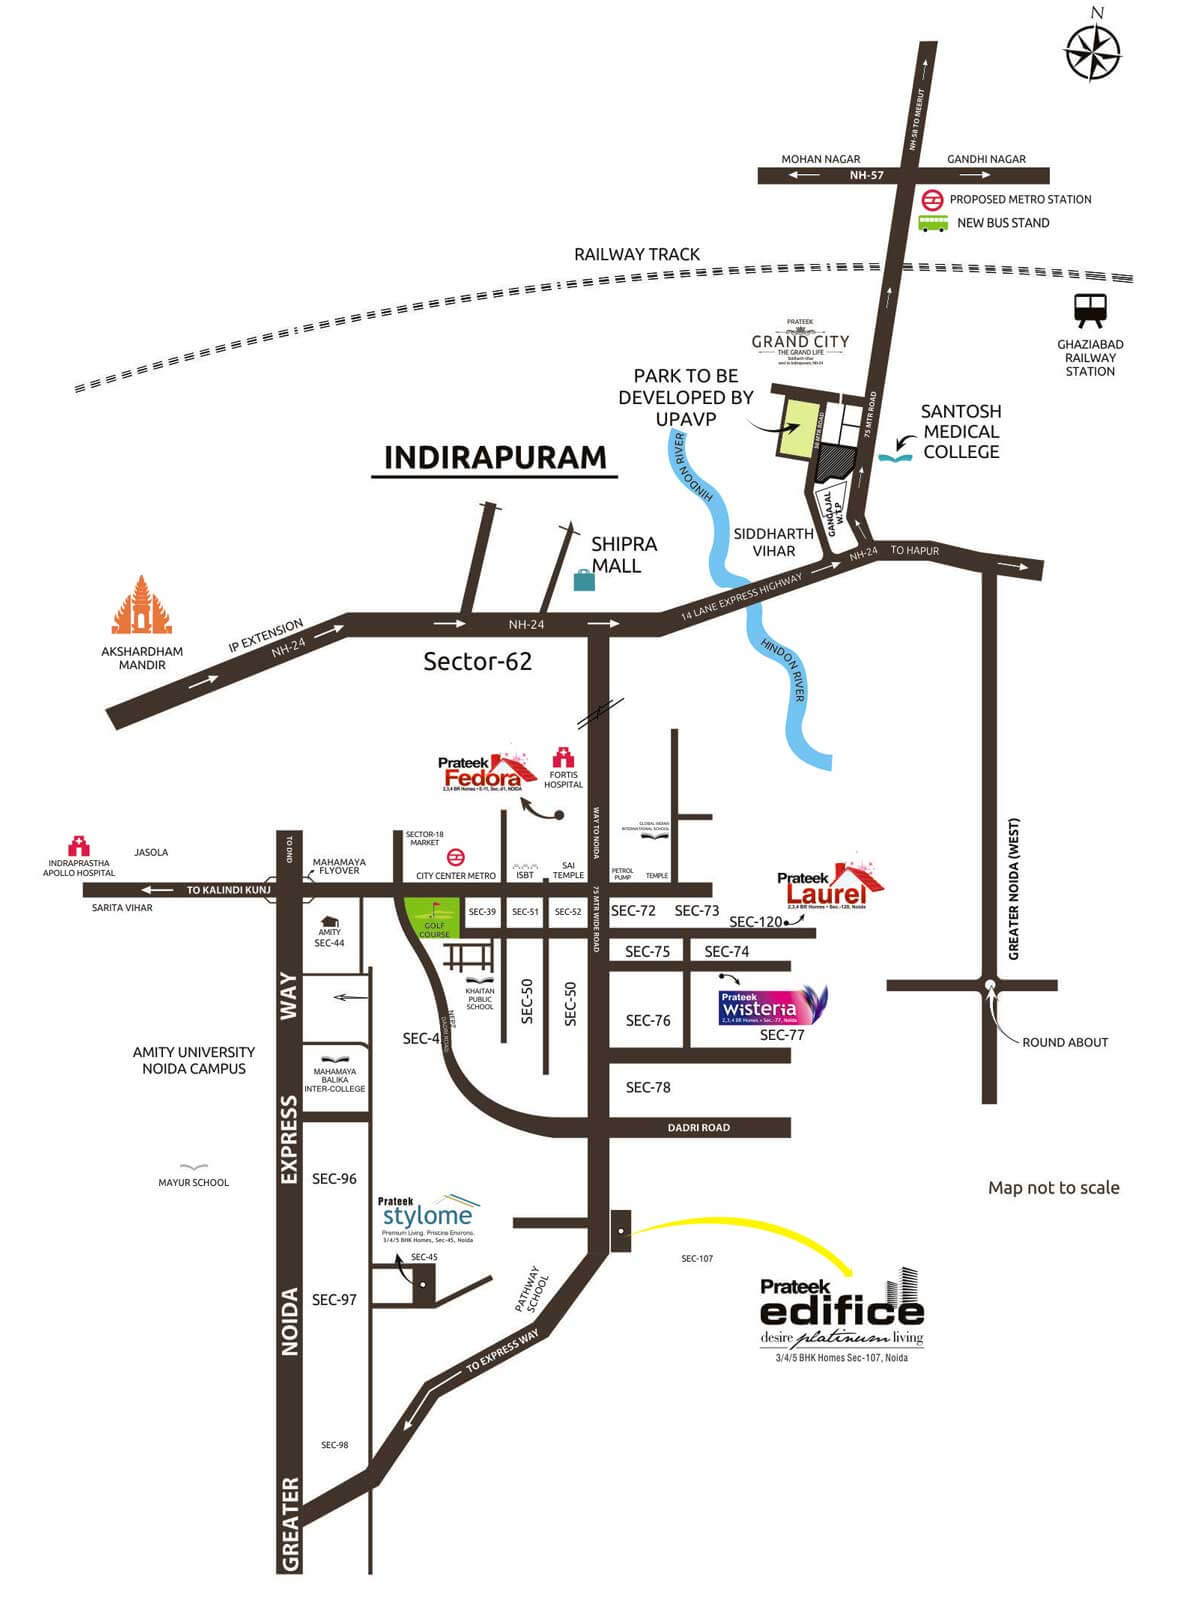 Prateek Edifice Location Map